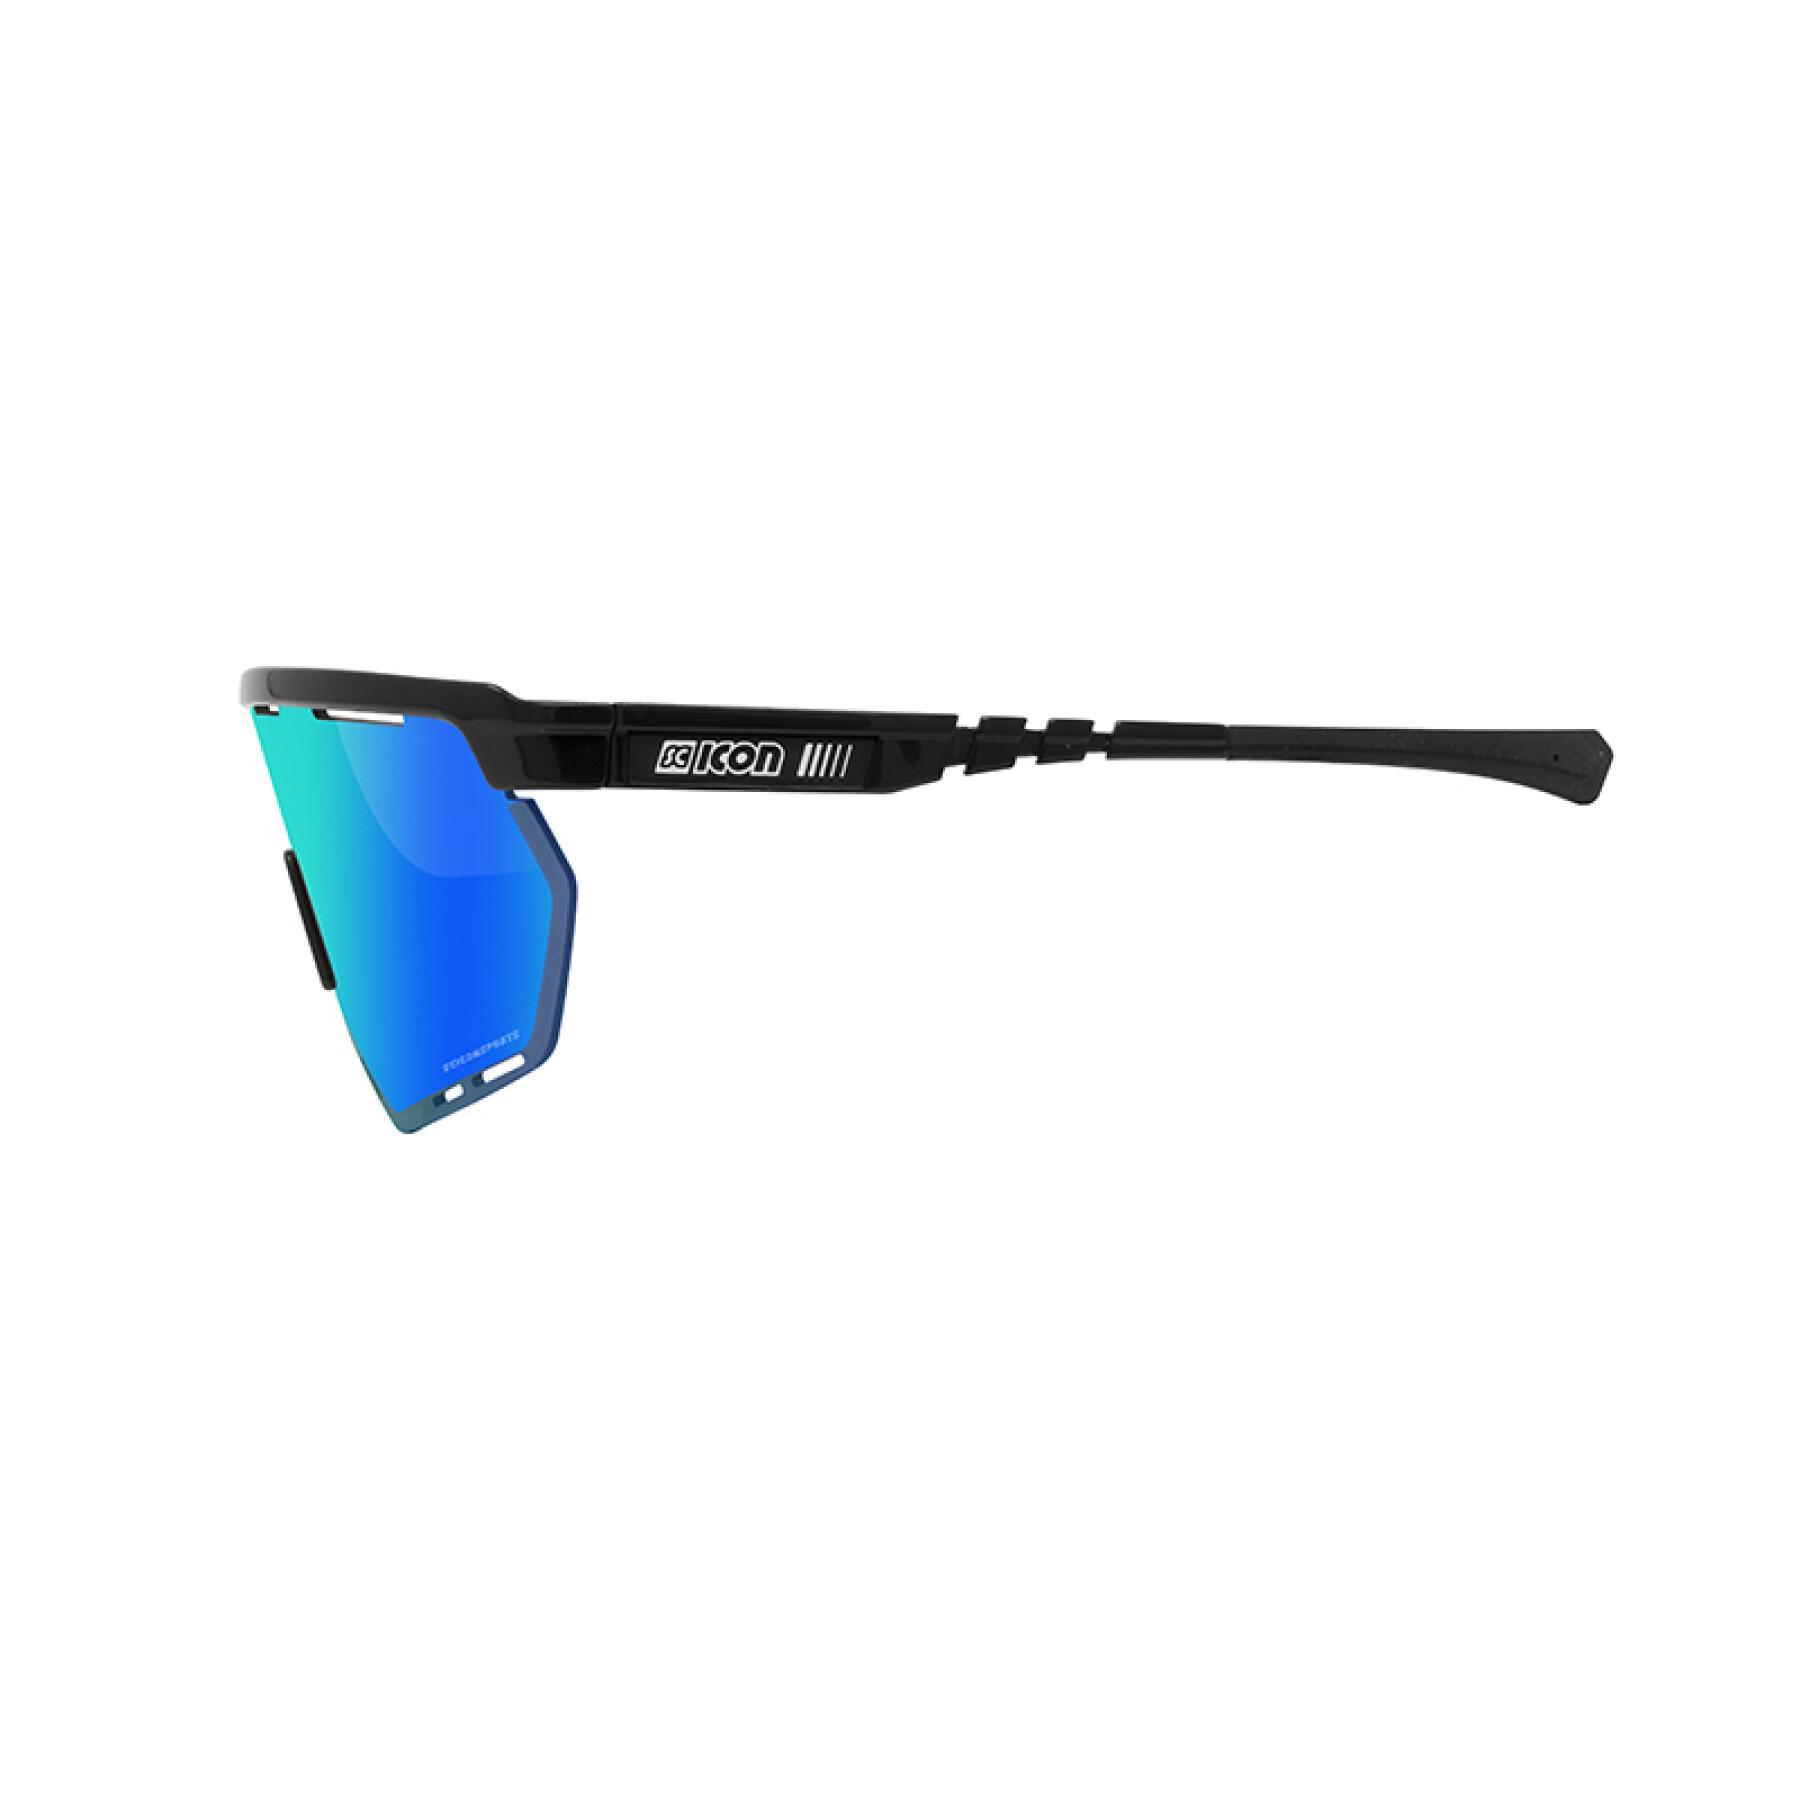 Okulary Scicon aerowing scnpp verre multi-reflet bleues